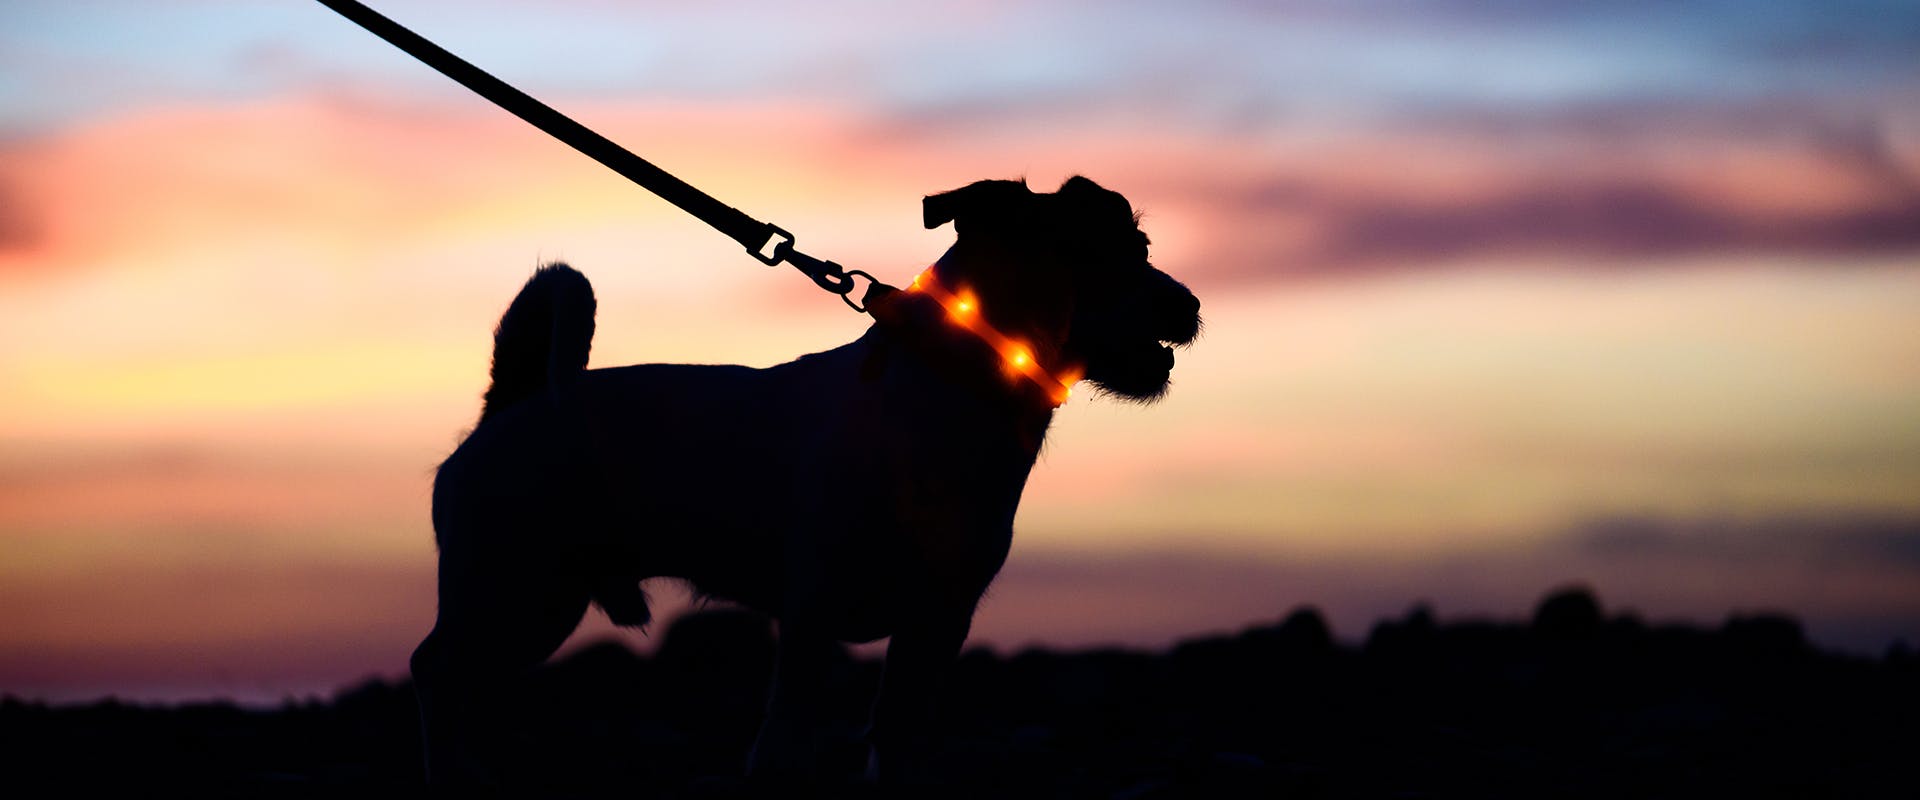 Design Gute cc simon Haustier Hund LED-Blitz Kragen Licht Bunte